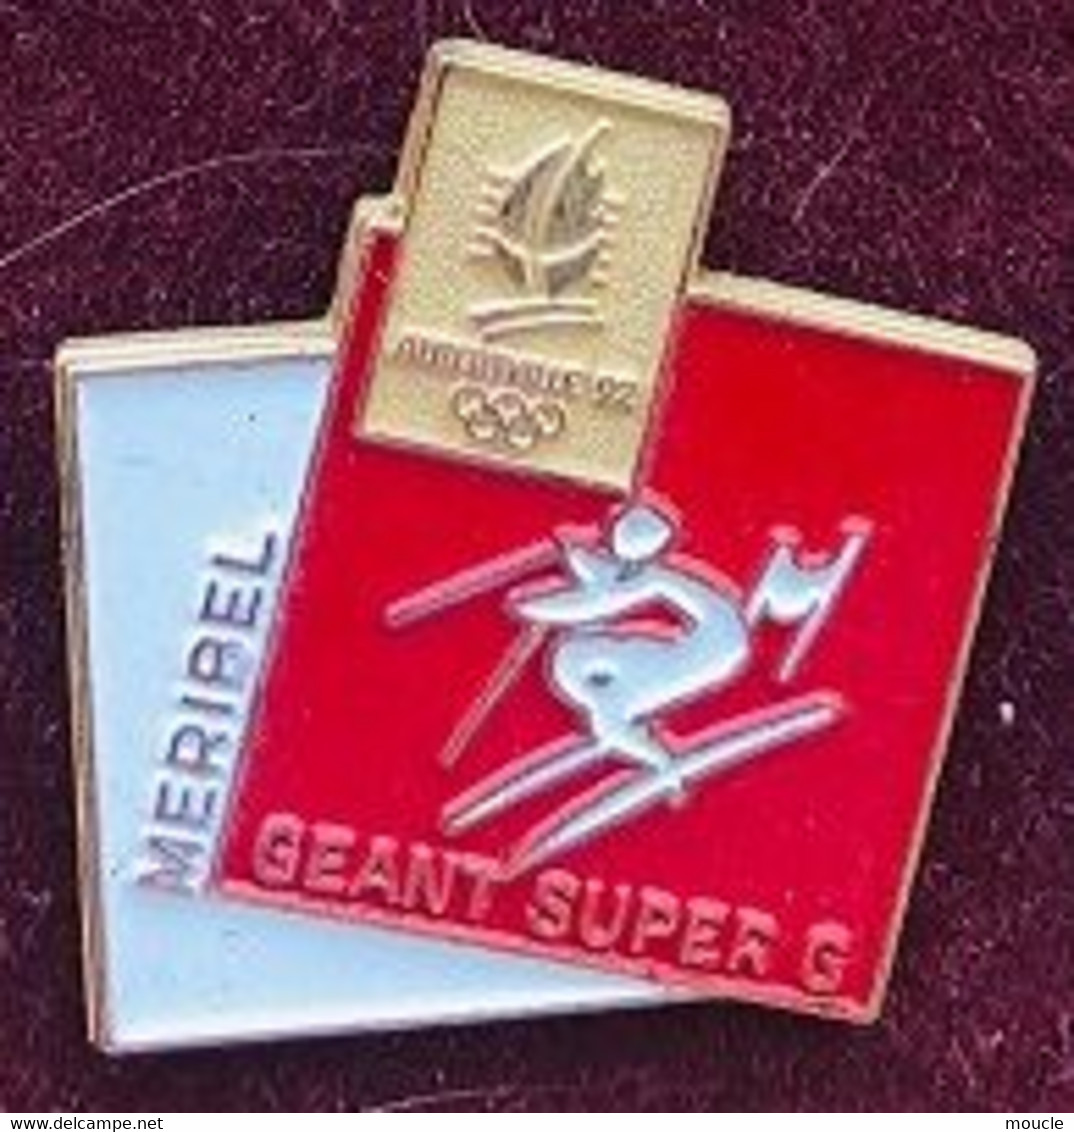 ALBERTVILLE 1992 / 92 - FRANCE - SITE MERIBEL - SKI - SLALOM GEANT - SUPER G - JEUX OLYMPIQUES - SAVOIE - ANNEAUX - (JO) - Olympic Games